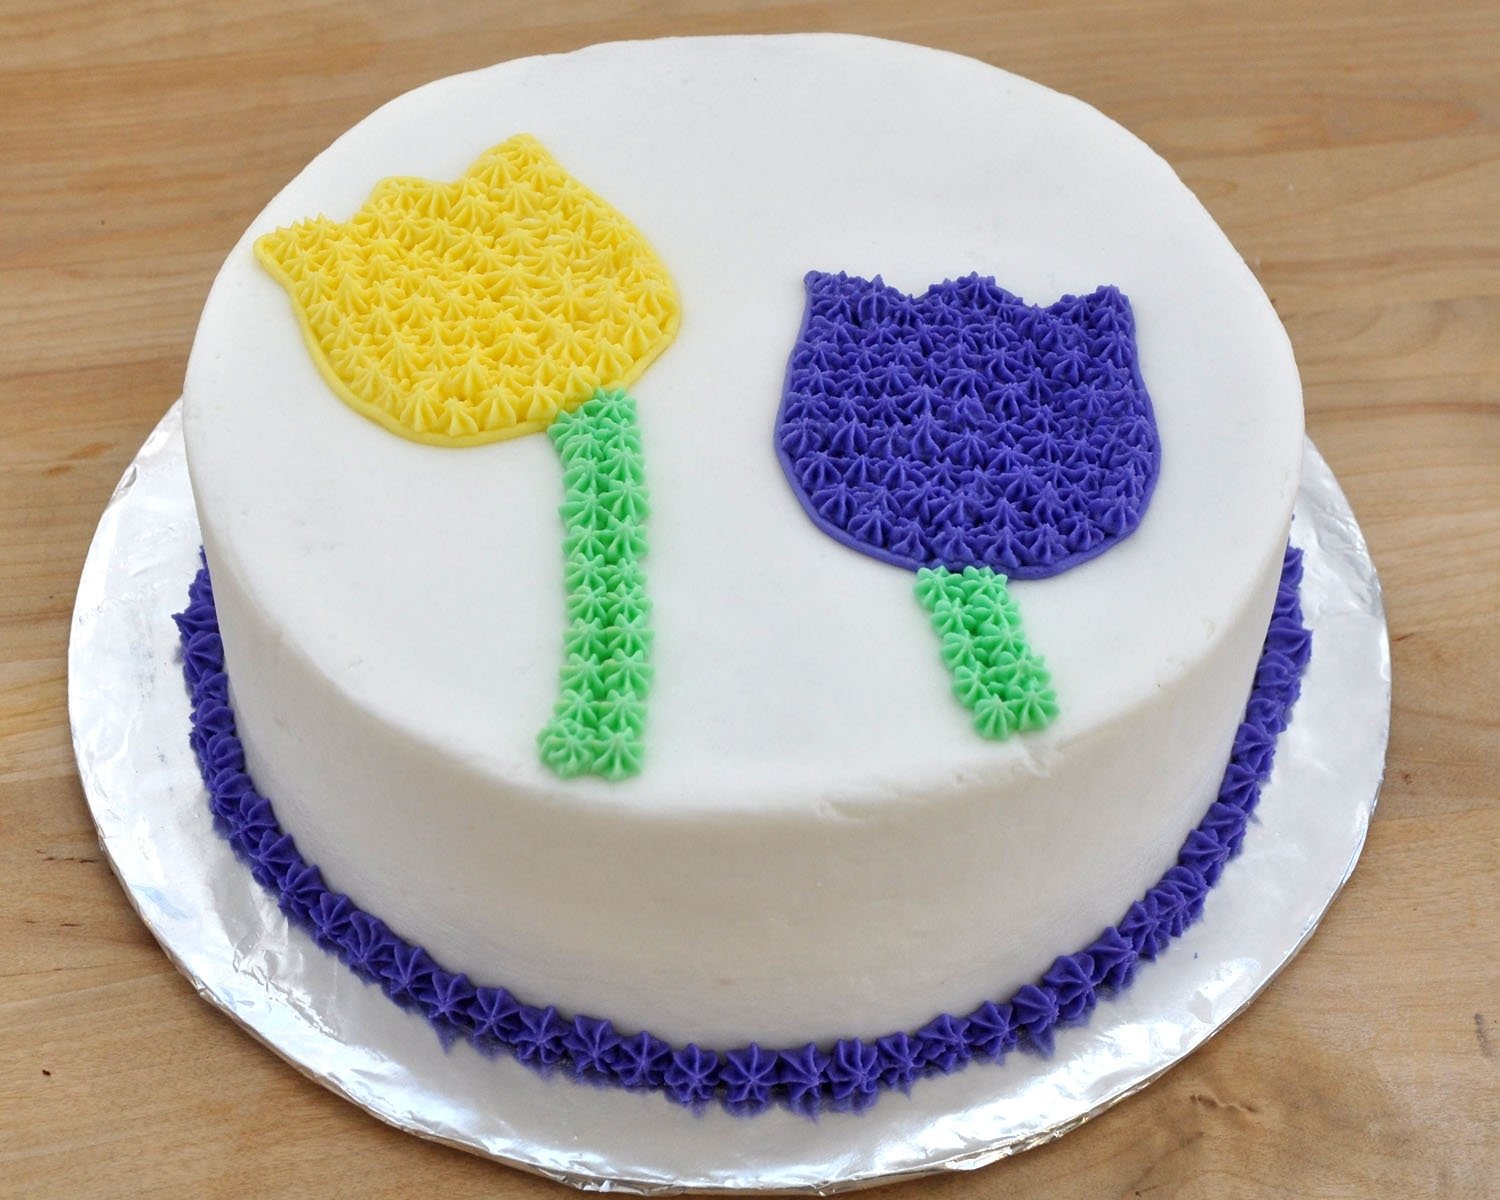 10 Perfect Cake Decorating Ideas For Beginners beki cooks cake blog cake decorating 101 easy birthday cake 1 2022